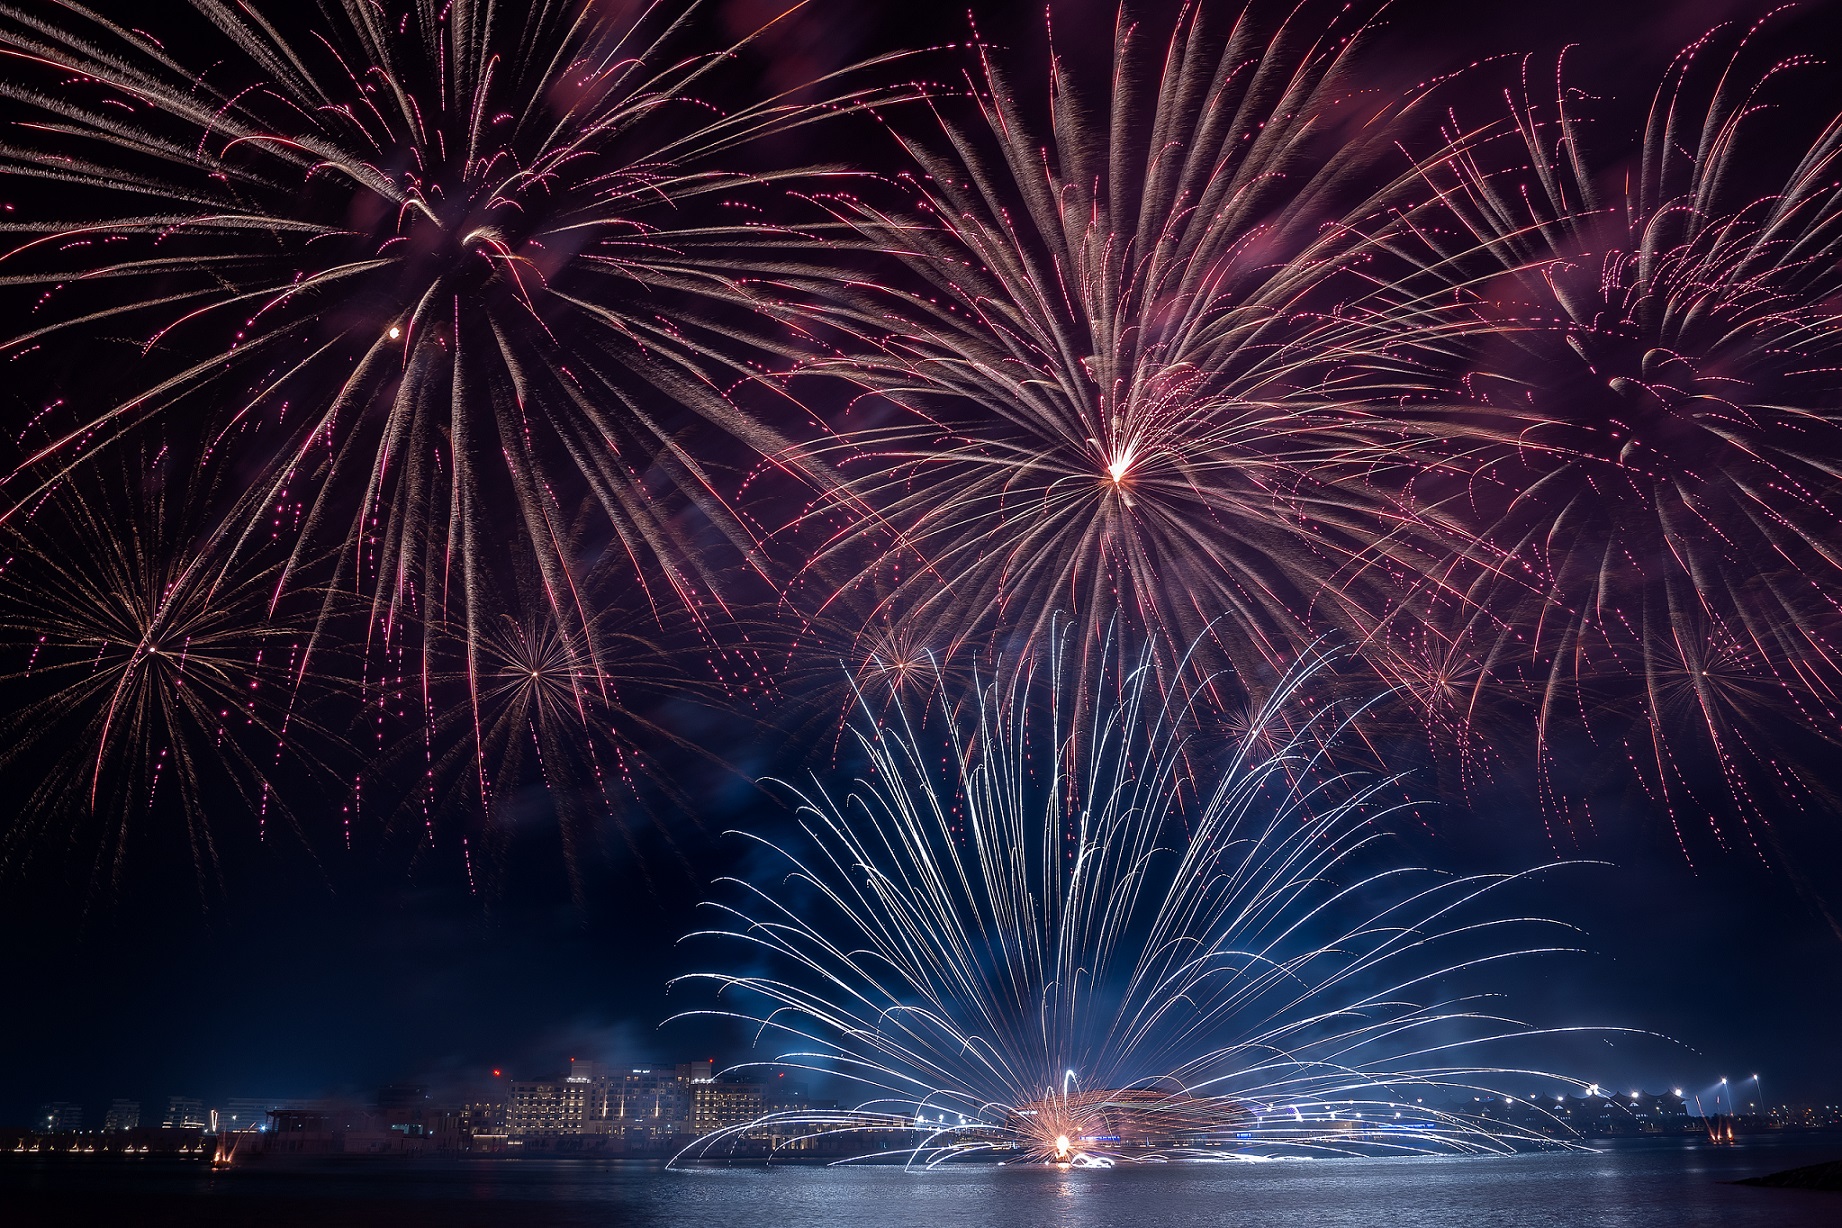 Sensational Fireworks Spectacle Lights Up Yas Island In Celebration Of Eid Al-Fitr